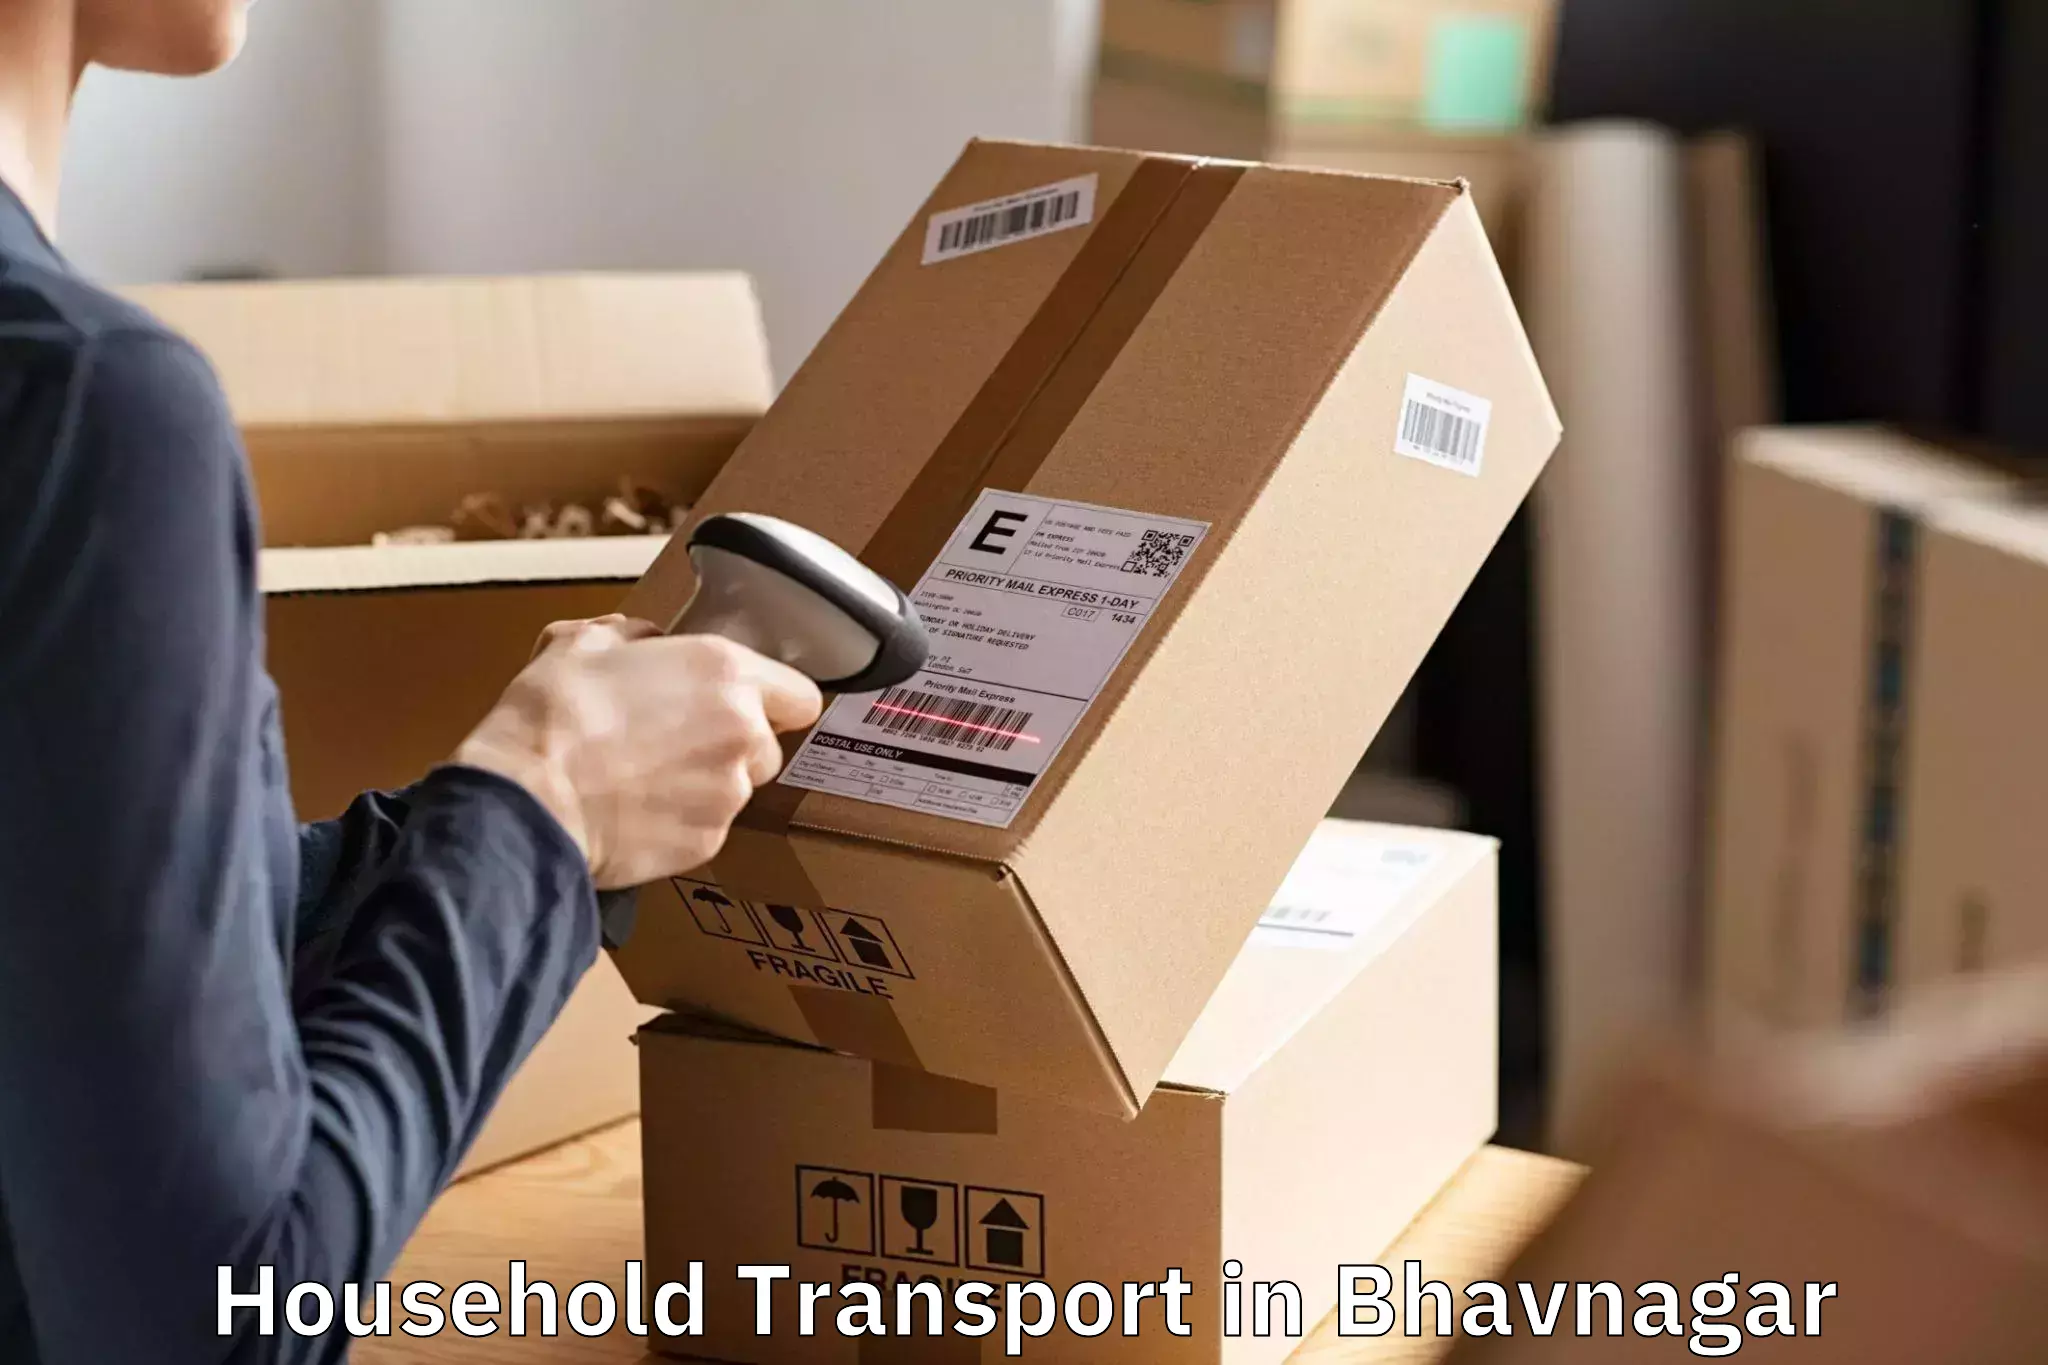 Household Transport Booking in Bhavnagar, Gujarat (GJ)